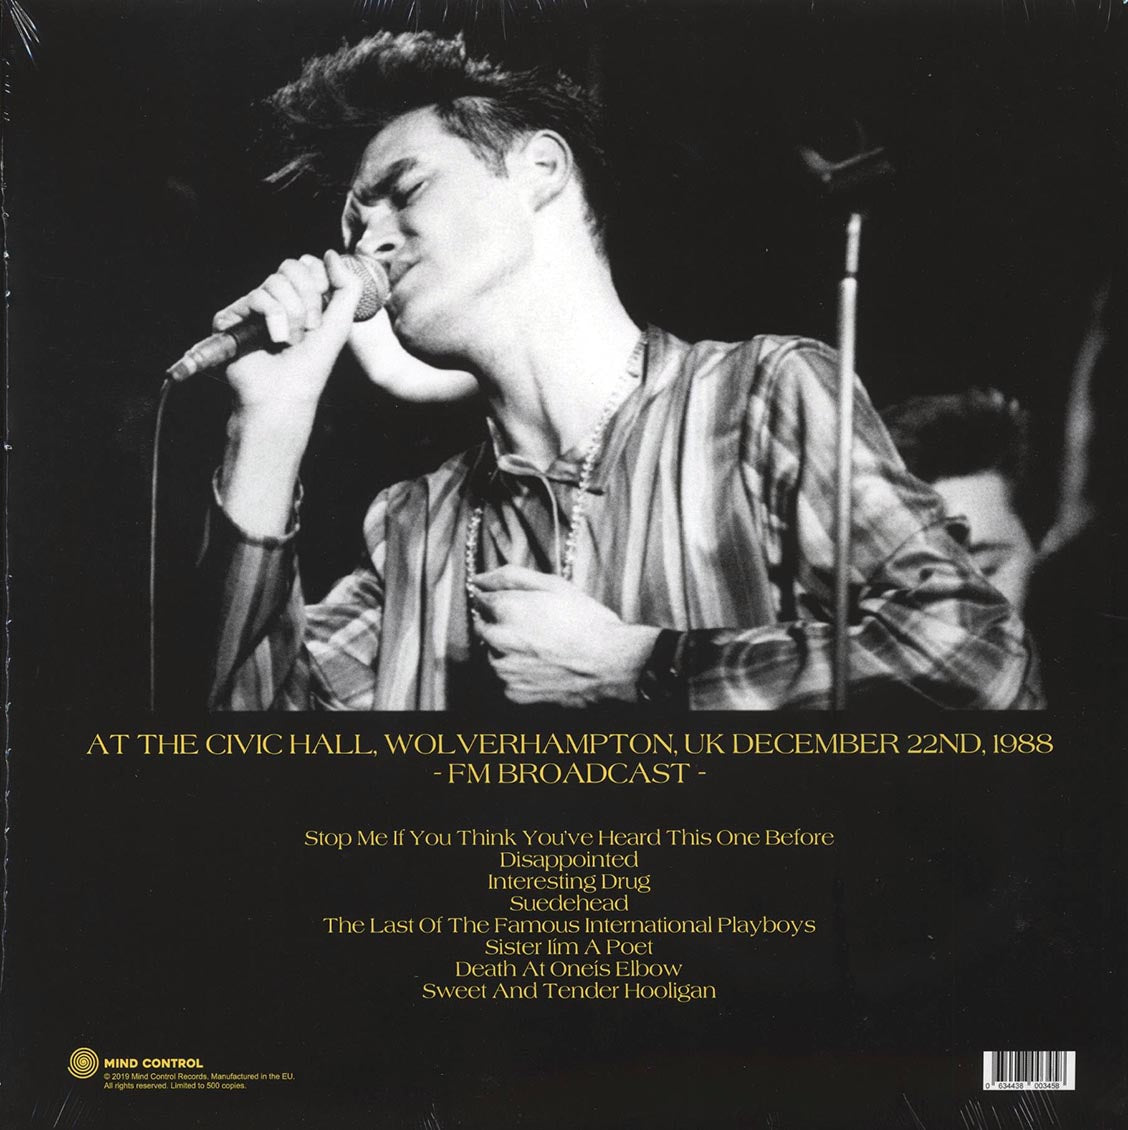 Morrissey - At The Civic Hall, Wolverhampton, UK December 22nd, 1988 (ltd. 500 copies made) - Vinyl LP, LP